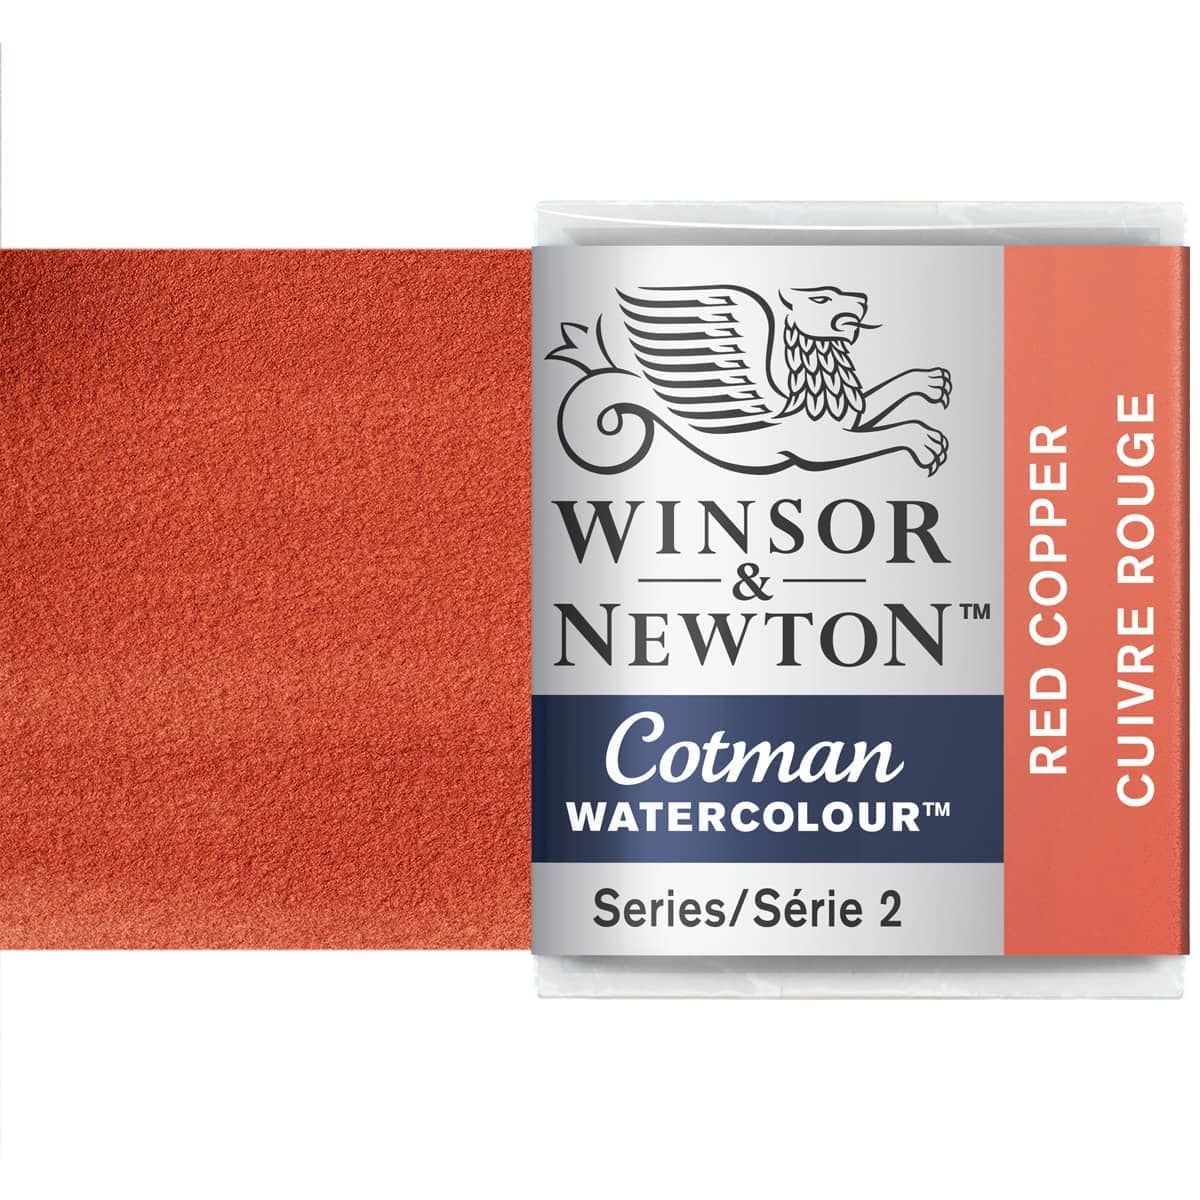 Winsor & Newton Cotman Watercolor Travel Set Portable 12-color Half-block  Luxury Sketch/Painting Pigment Hand-painted Art Supply